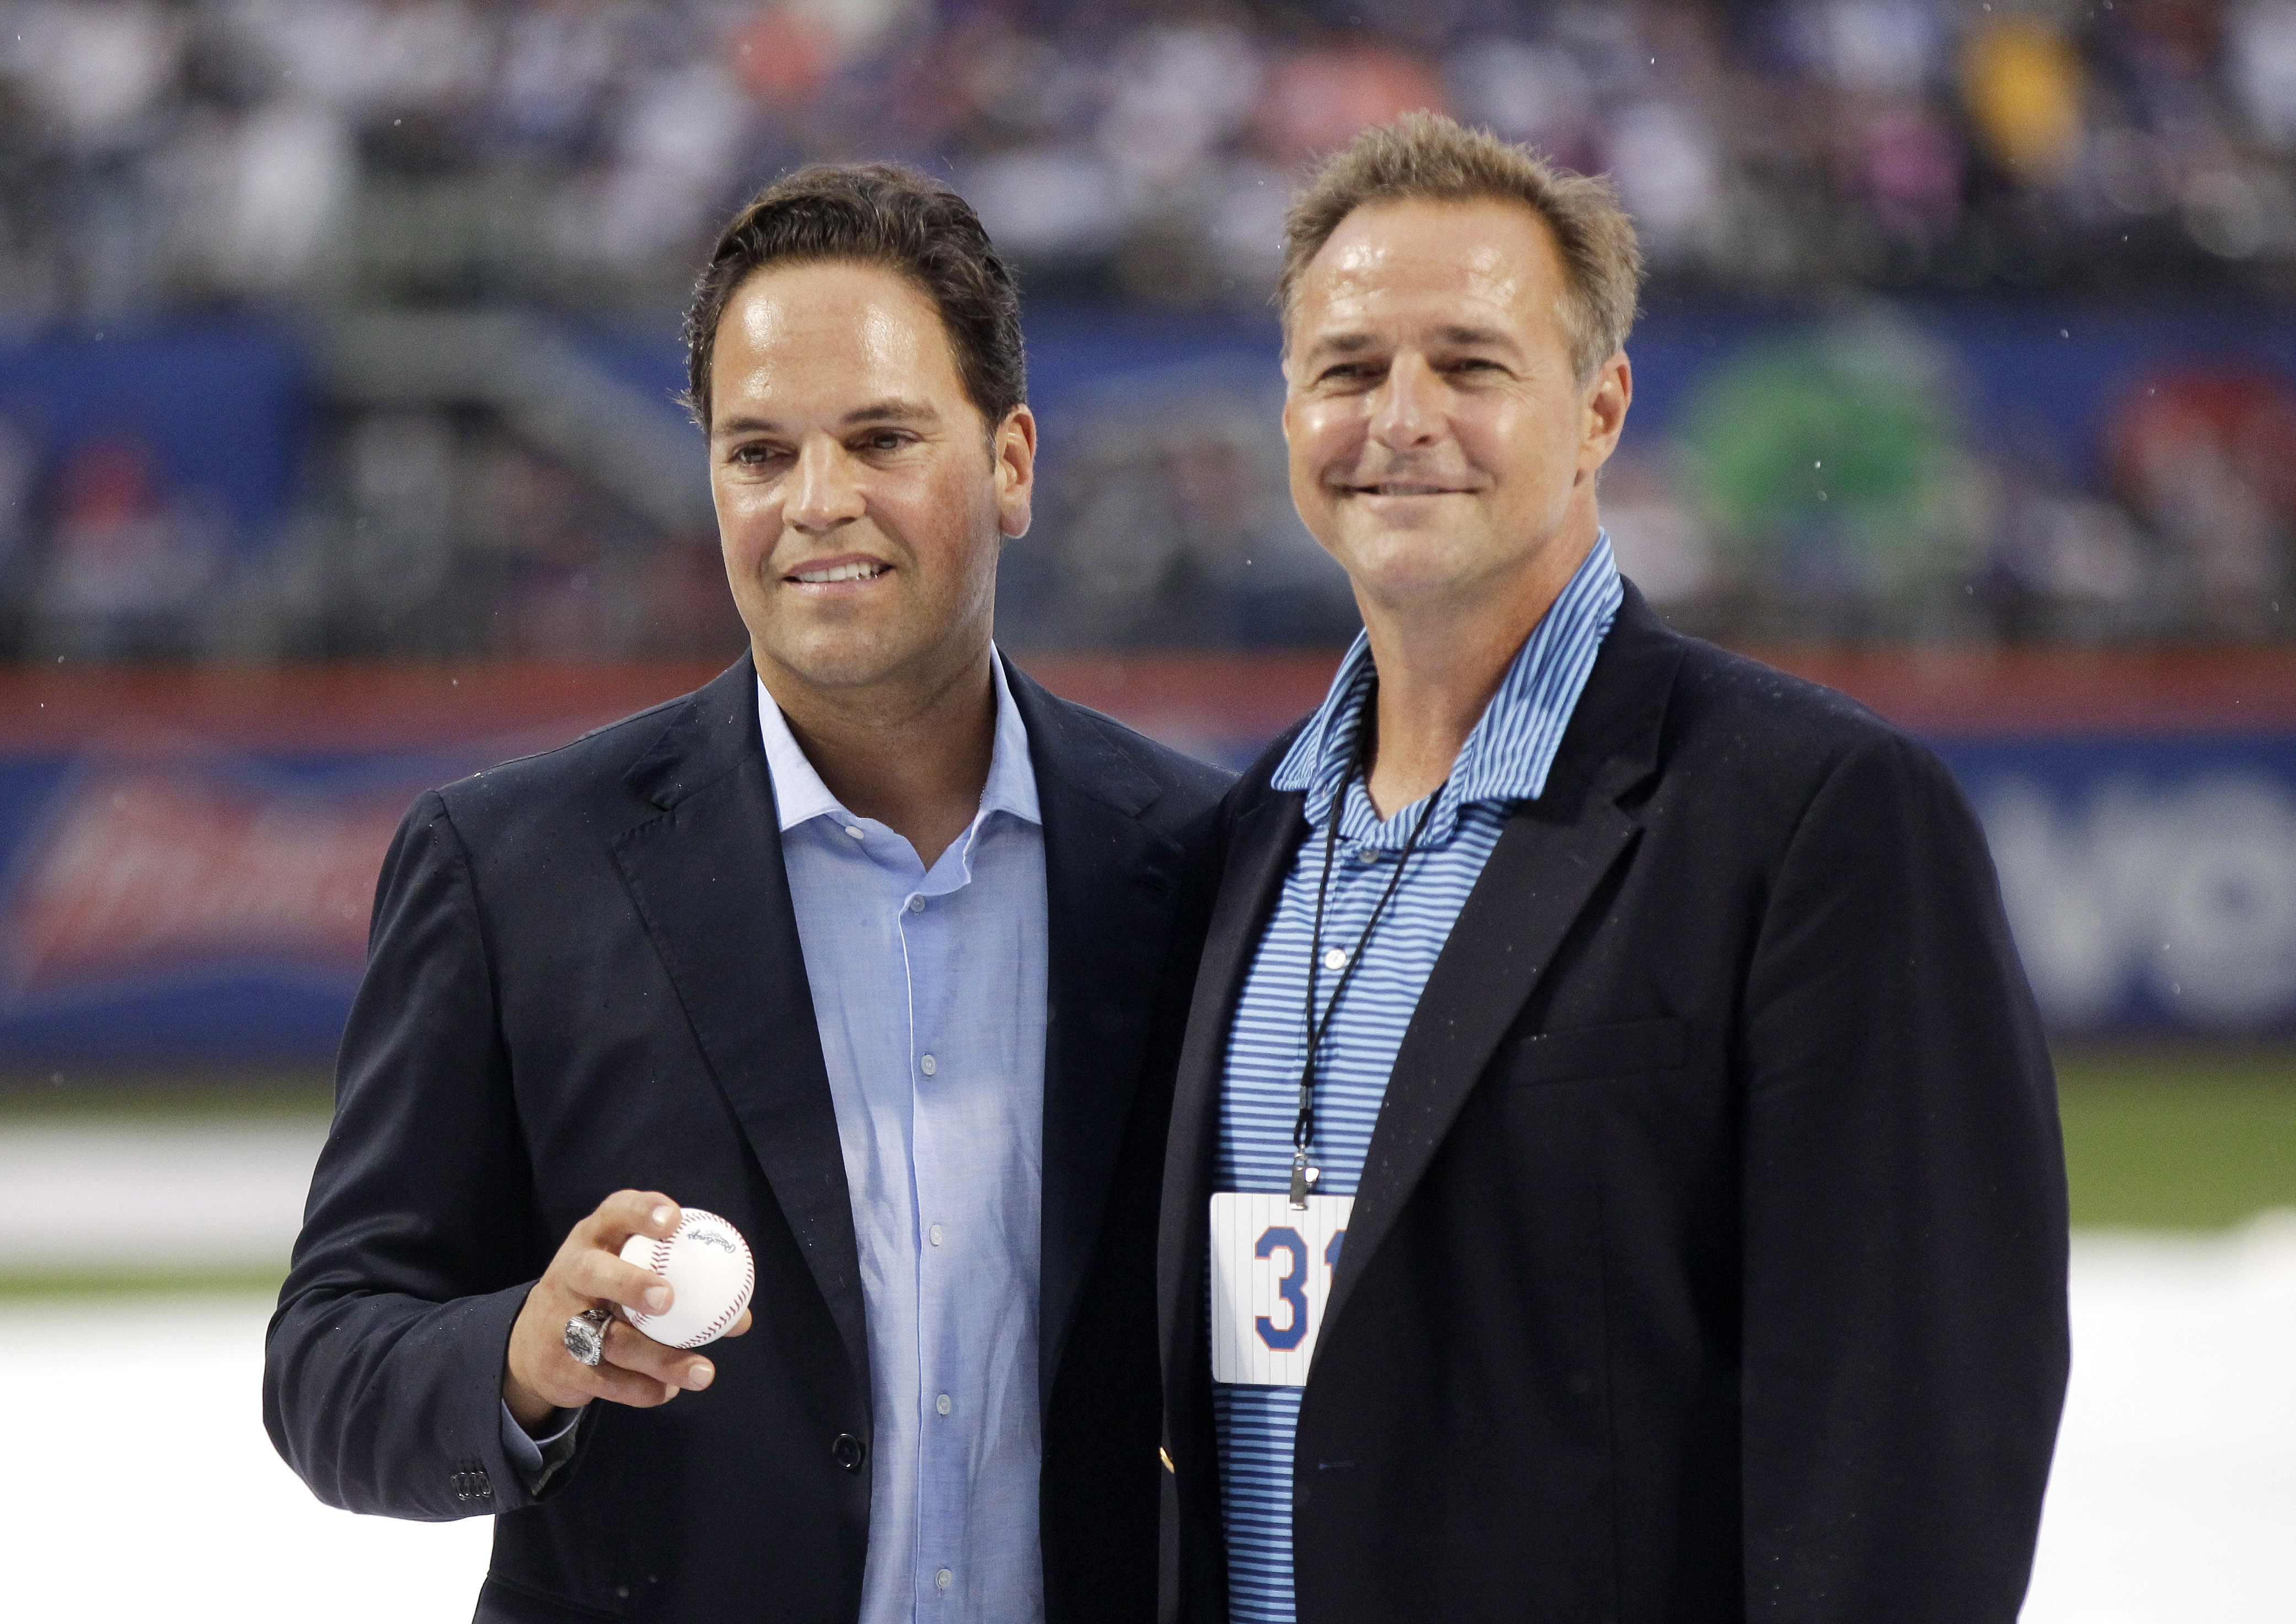 Report: New York Mets Add Al Leiter, John Franco As Baseball Advisers